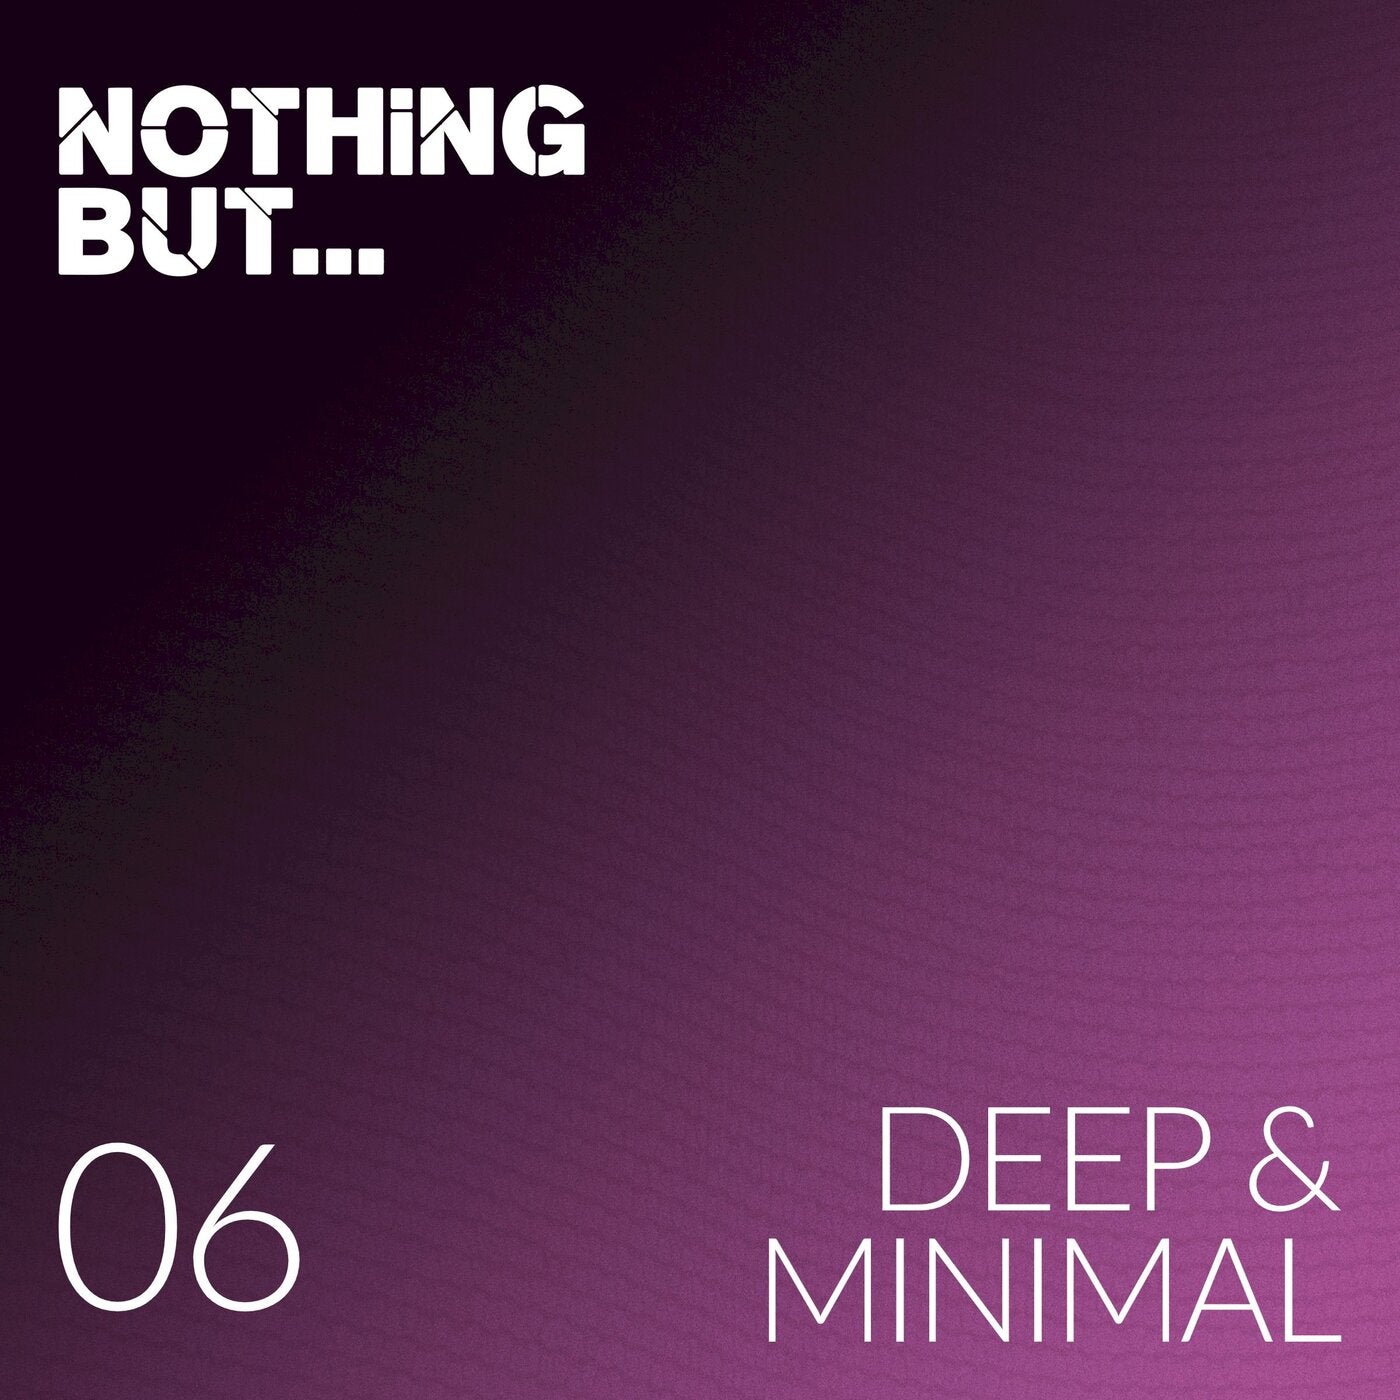 VA – Nothing But… Deep & Minimal, Vol. 06 [NBDM06]